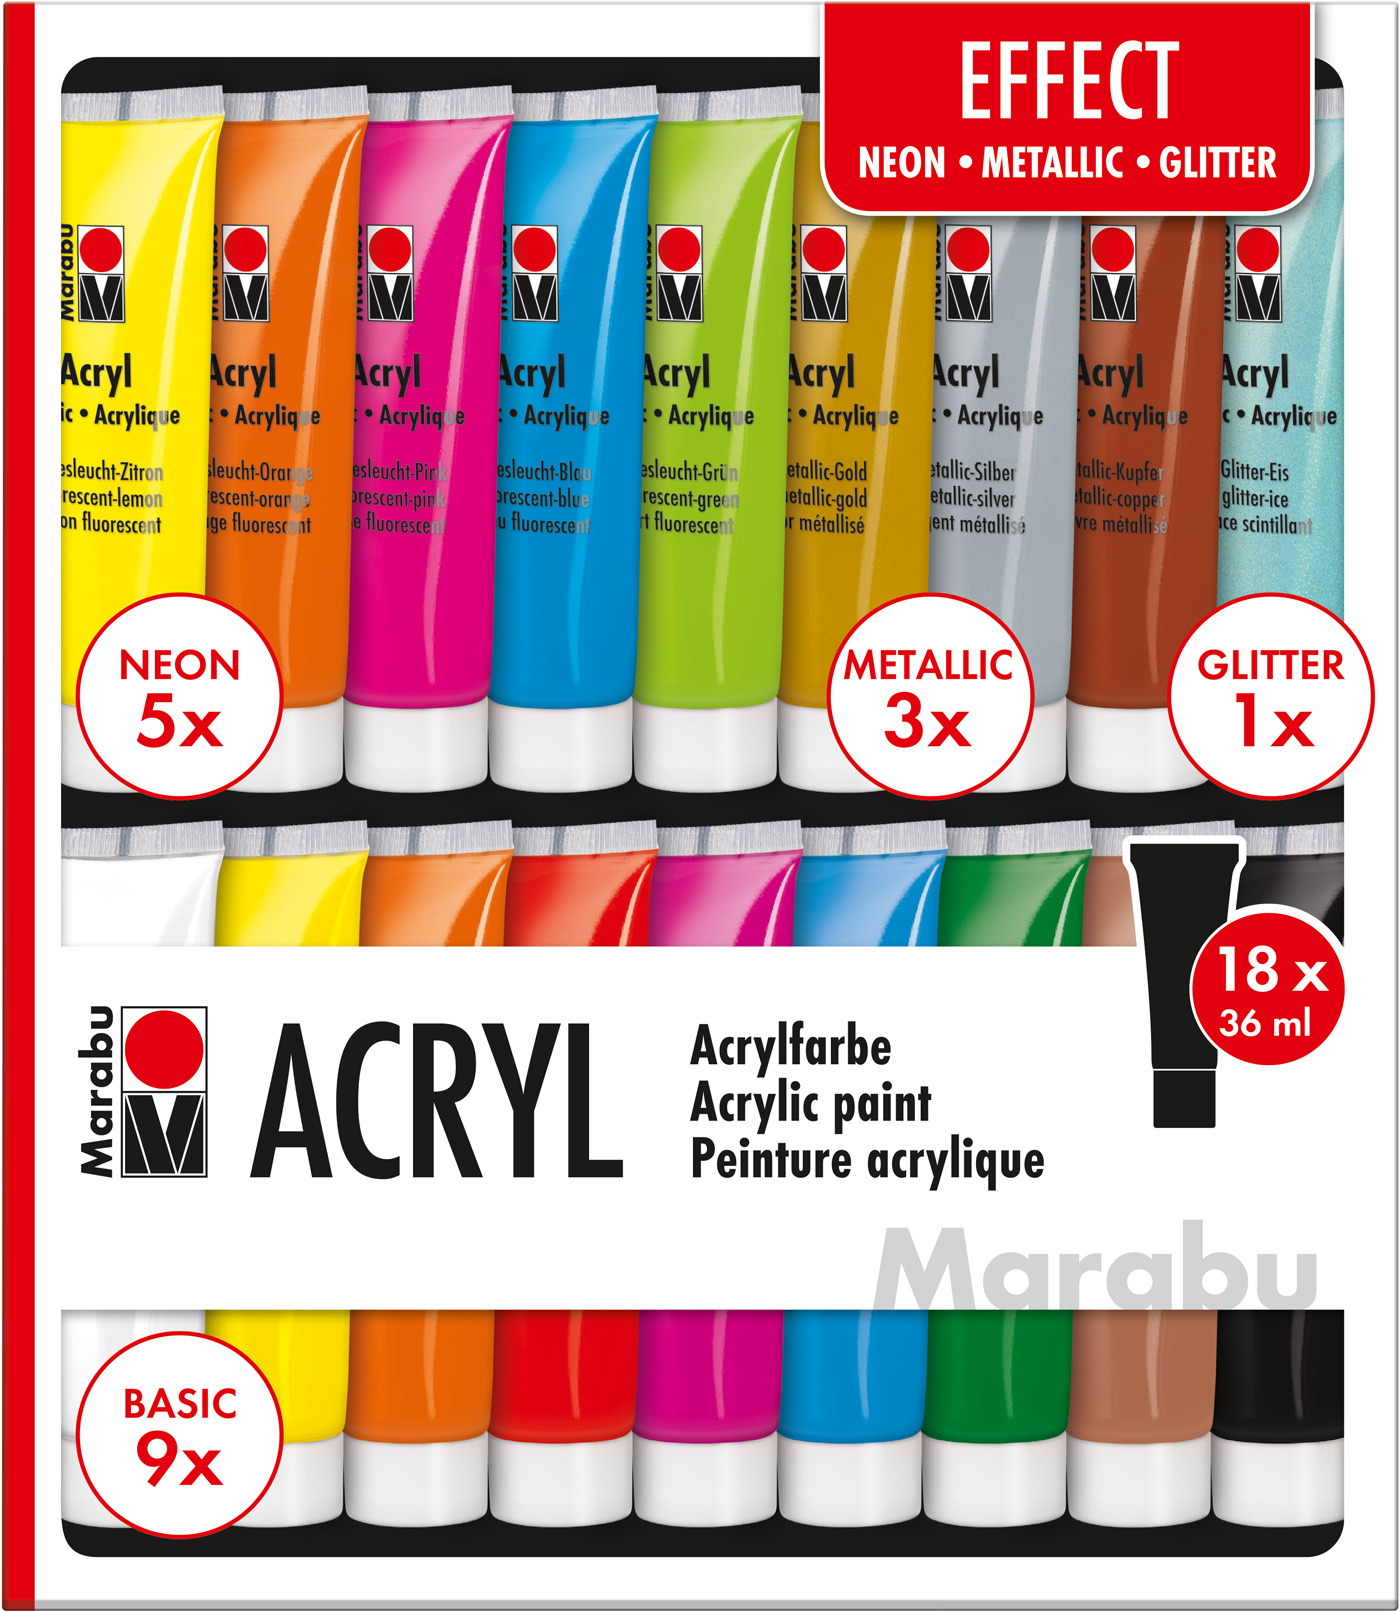 MARABU Acrylfarben-Set Effect 18 x 36 ml mehrere Farben